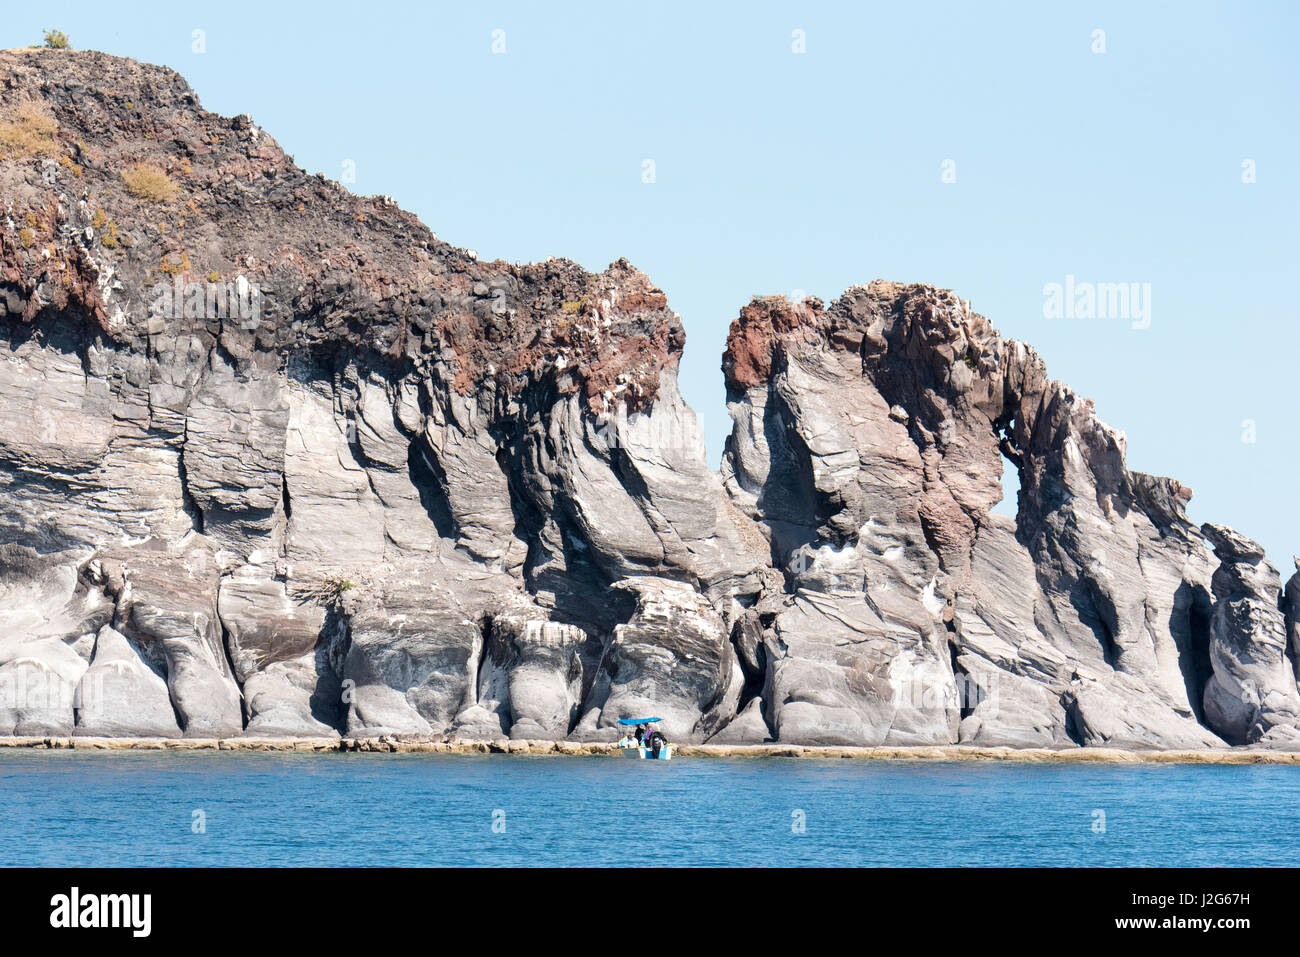 Mexico, Baja California Sur, Sea of Cortez, Loreto Bay. Isla Coronado lava formations. Panga with boaters gives sense of scale Stock Photo